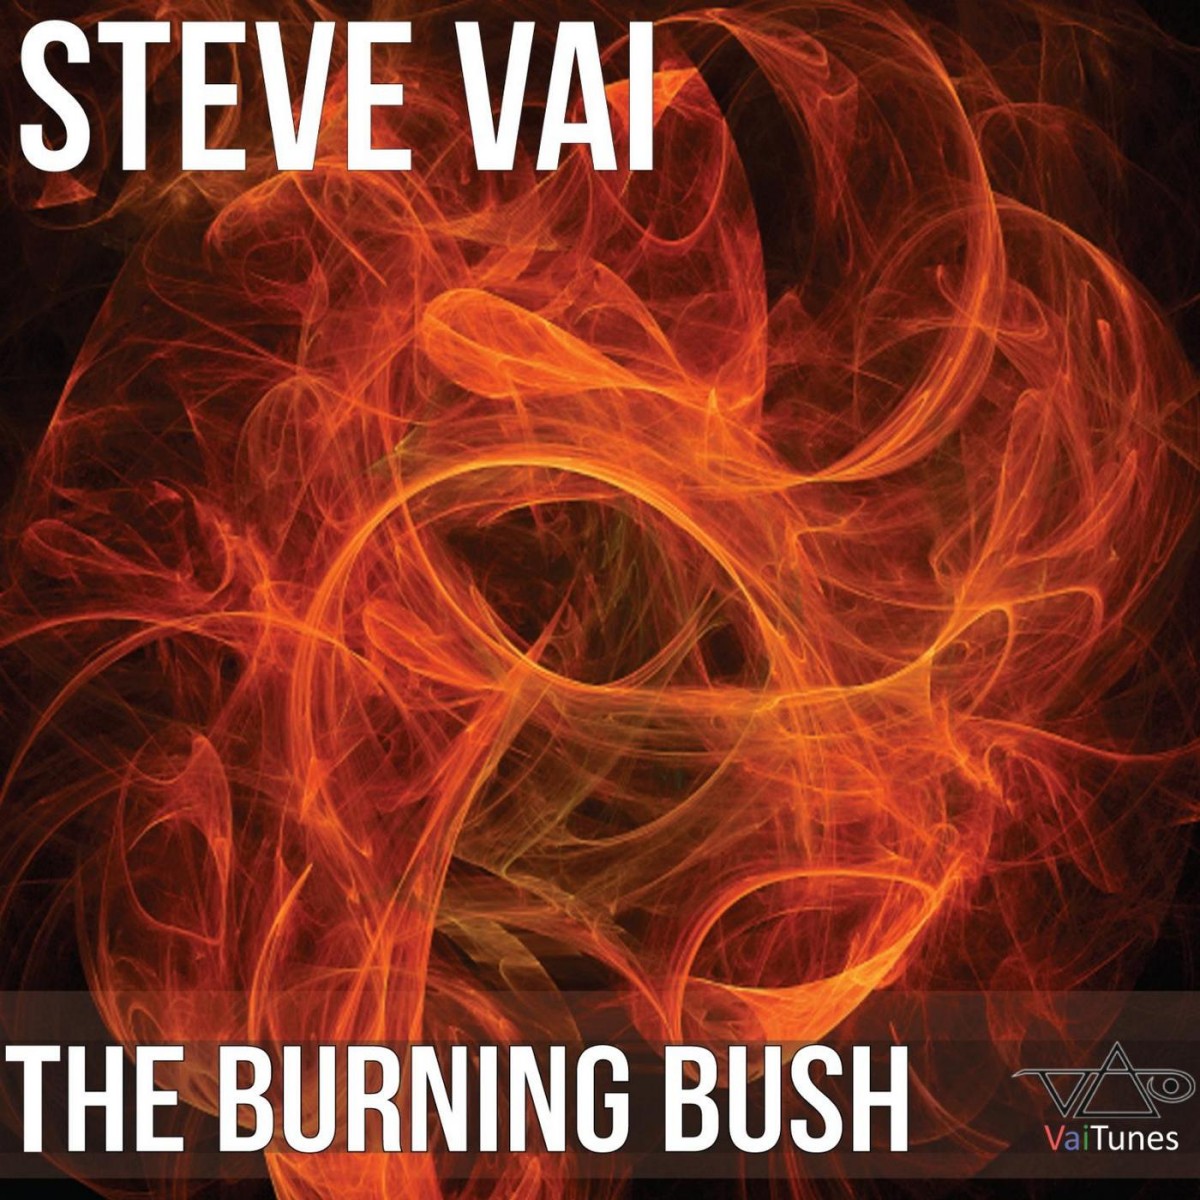 stevevai.it - The burning bush